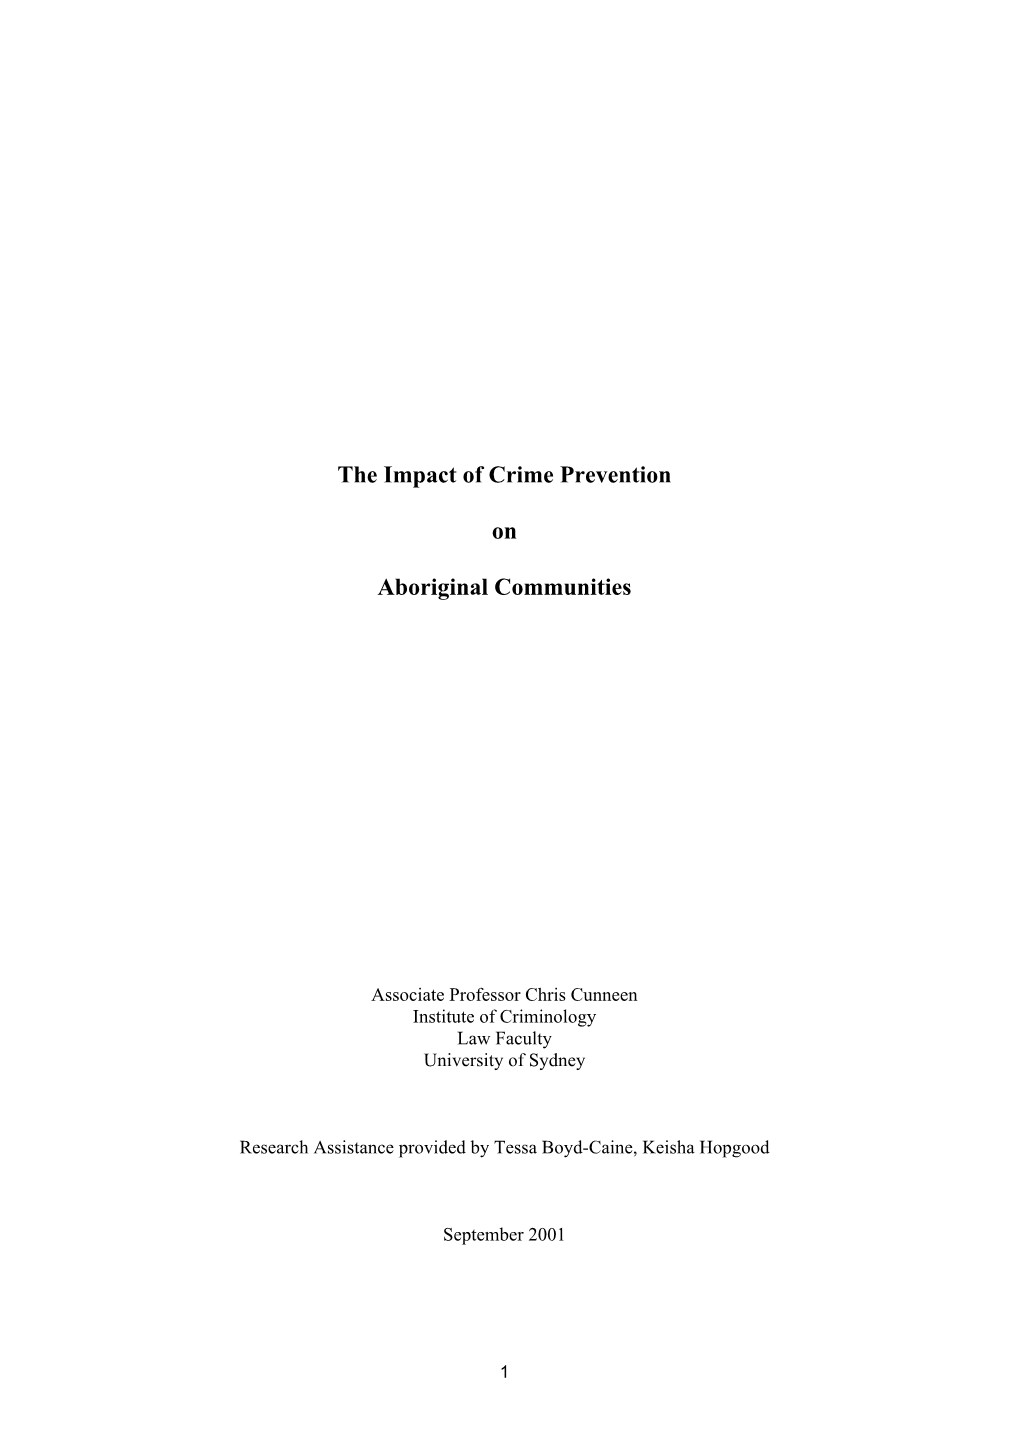 The Impact of Crime Prevention on Aboriginal Communities